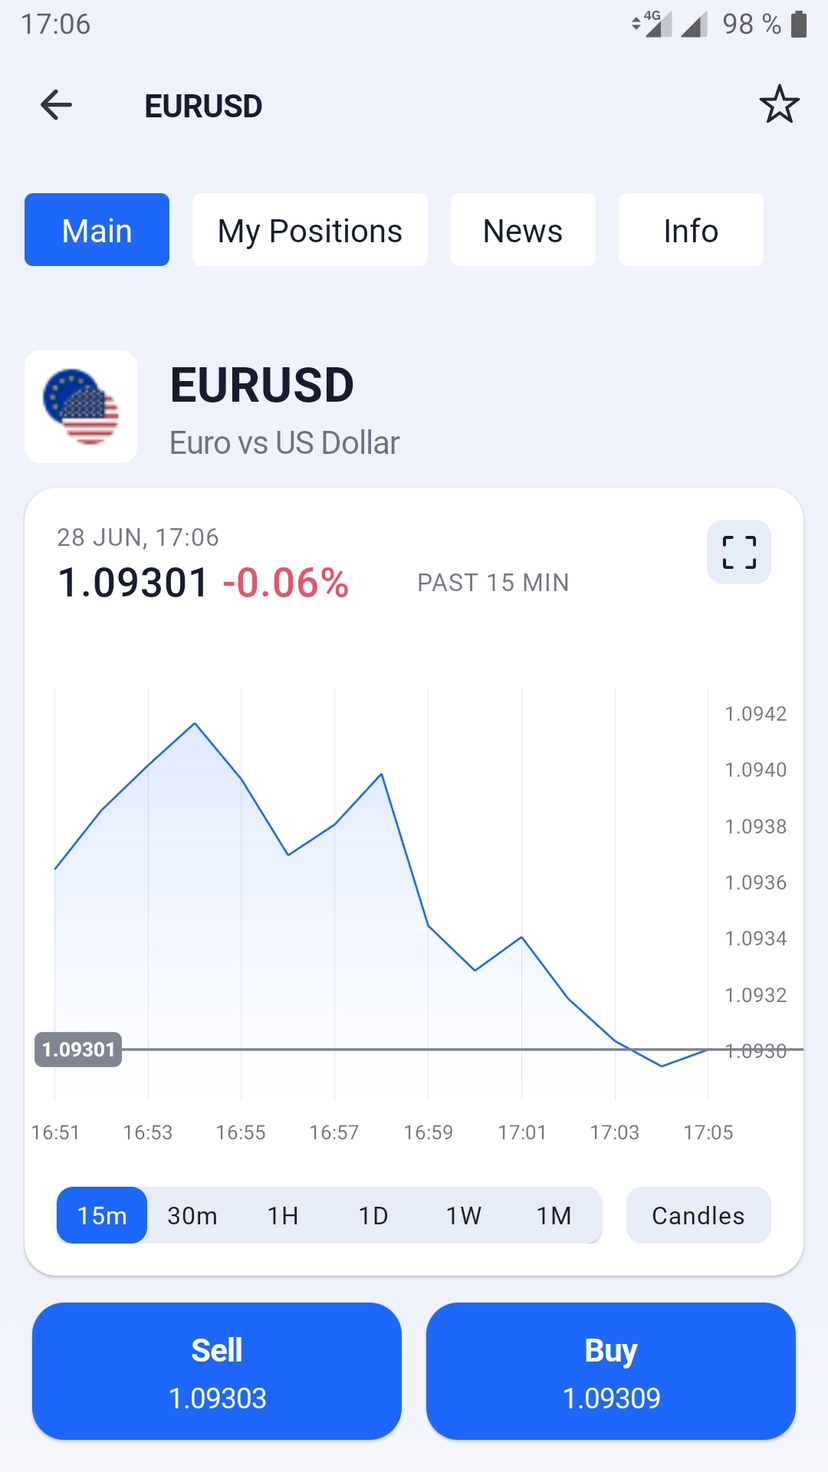 EURUSD chart in Admirals mobile app